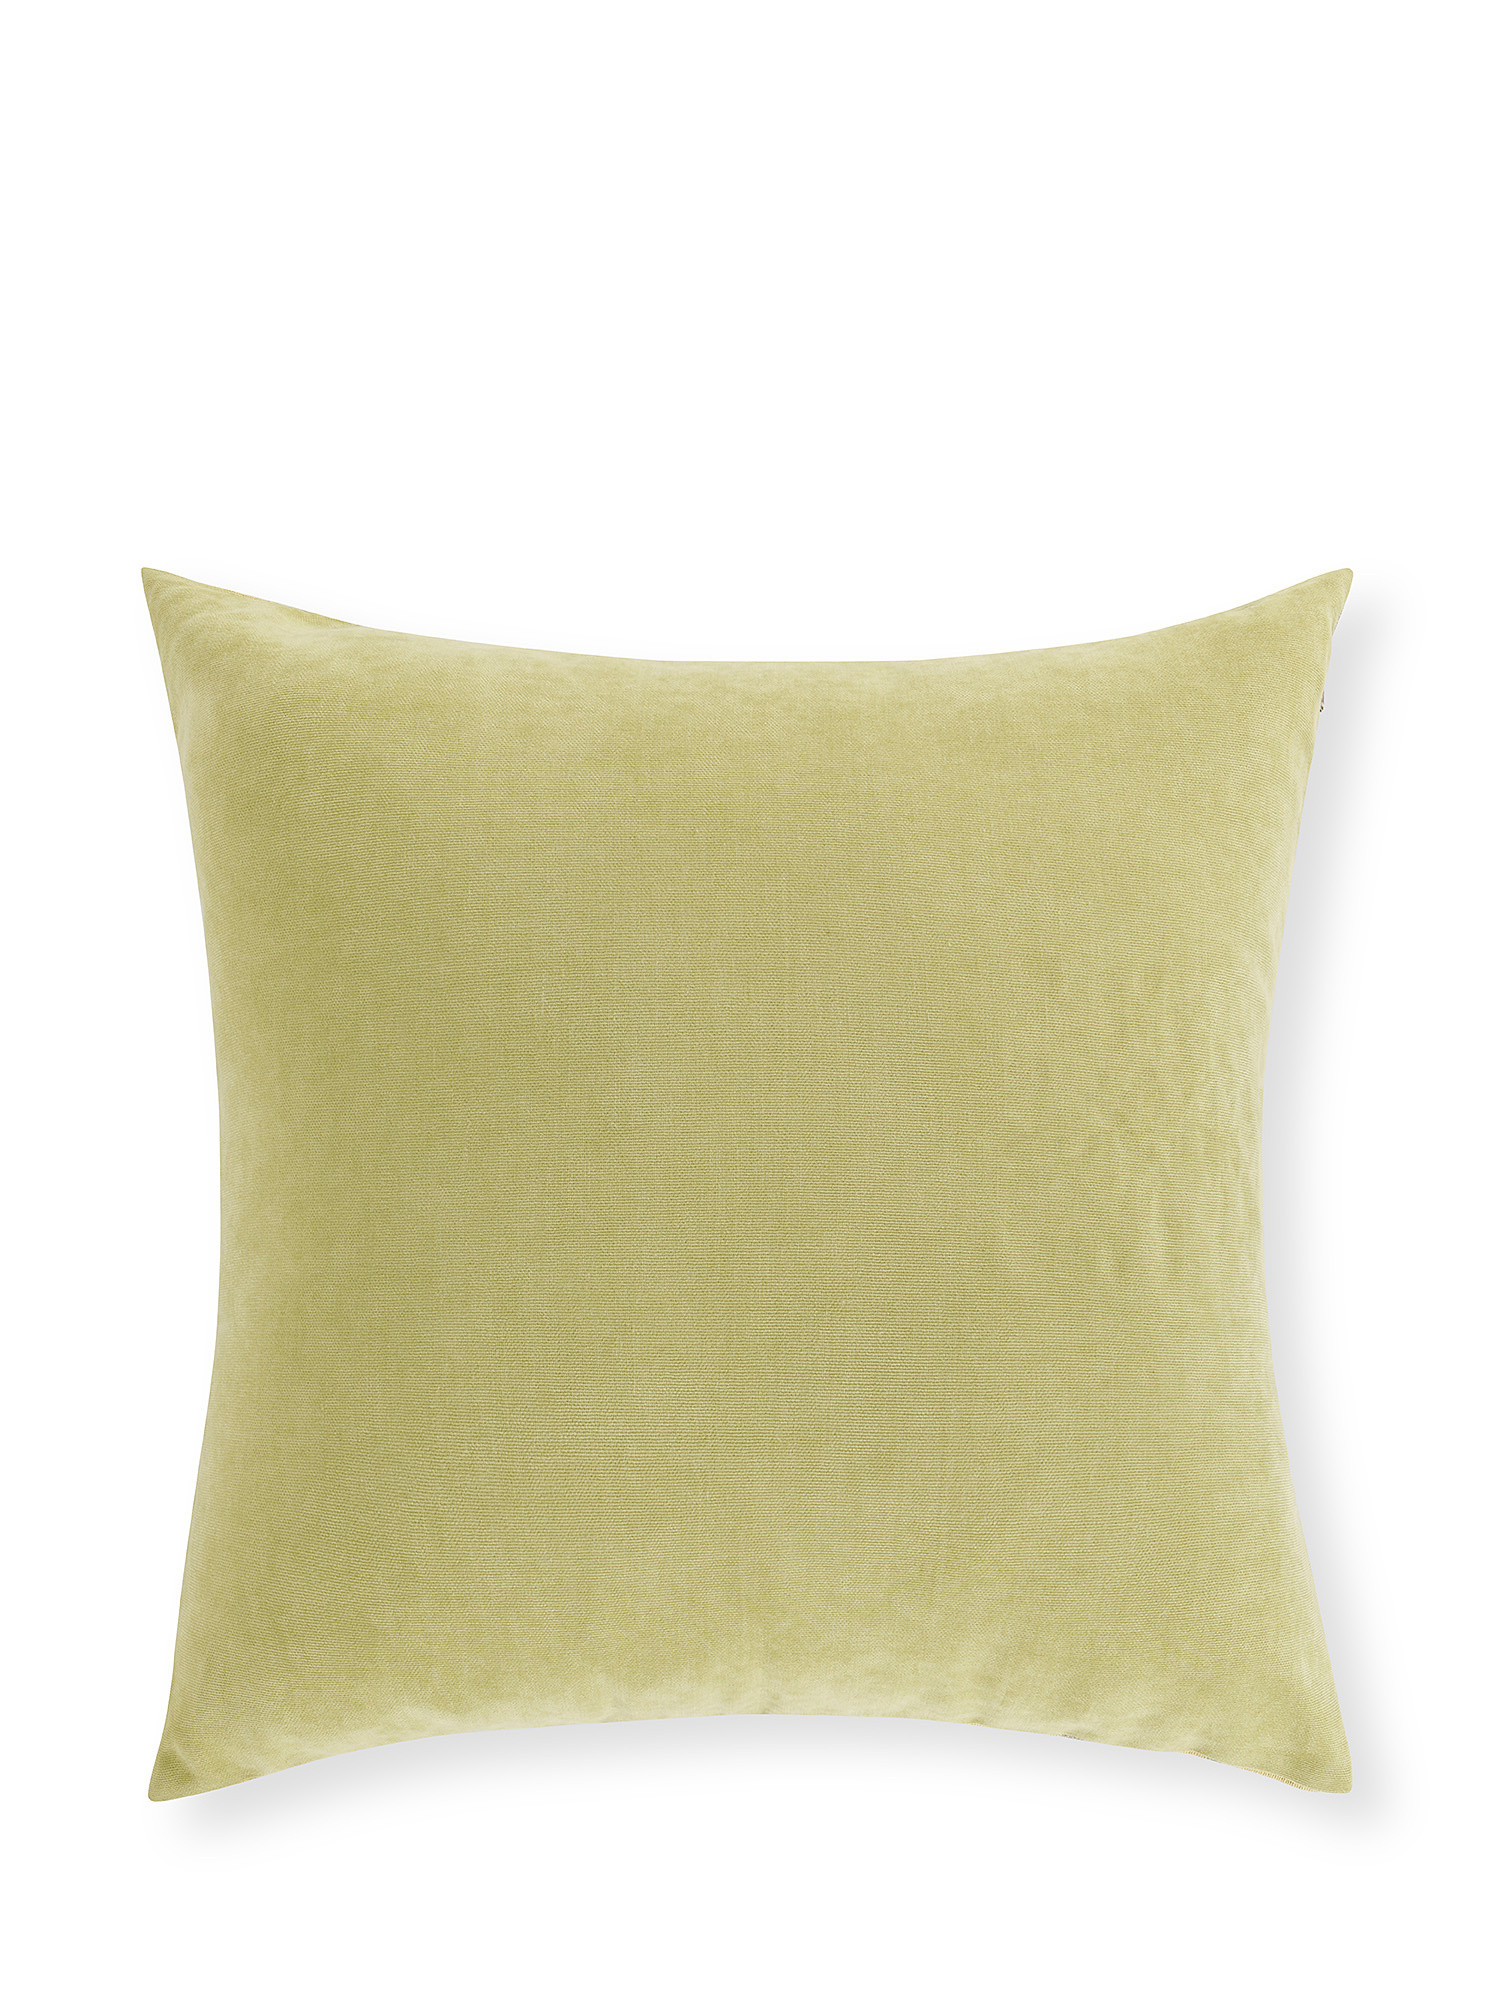 Jacquard cushion with flower motif 45x45cm, Beige, large image number 1